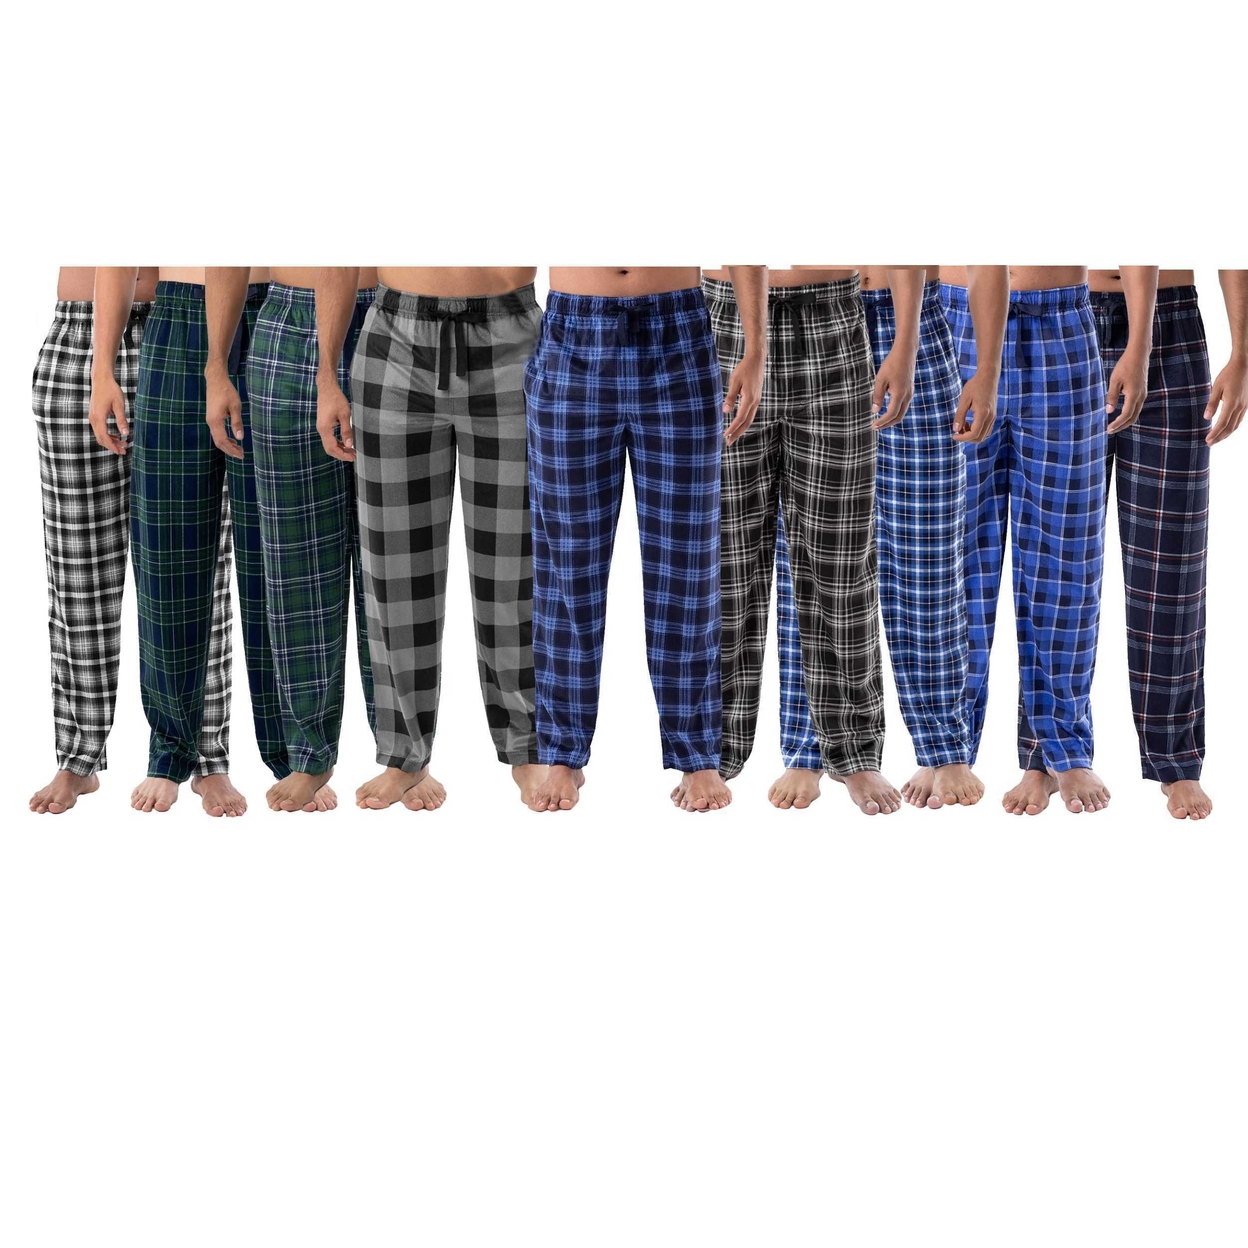 5-Pack: Men's Ultra-Soft Cozy Lounge Sleep Micro Fleece Plaid Pajama Pants - Large